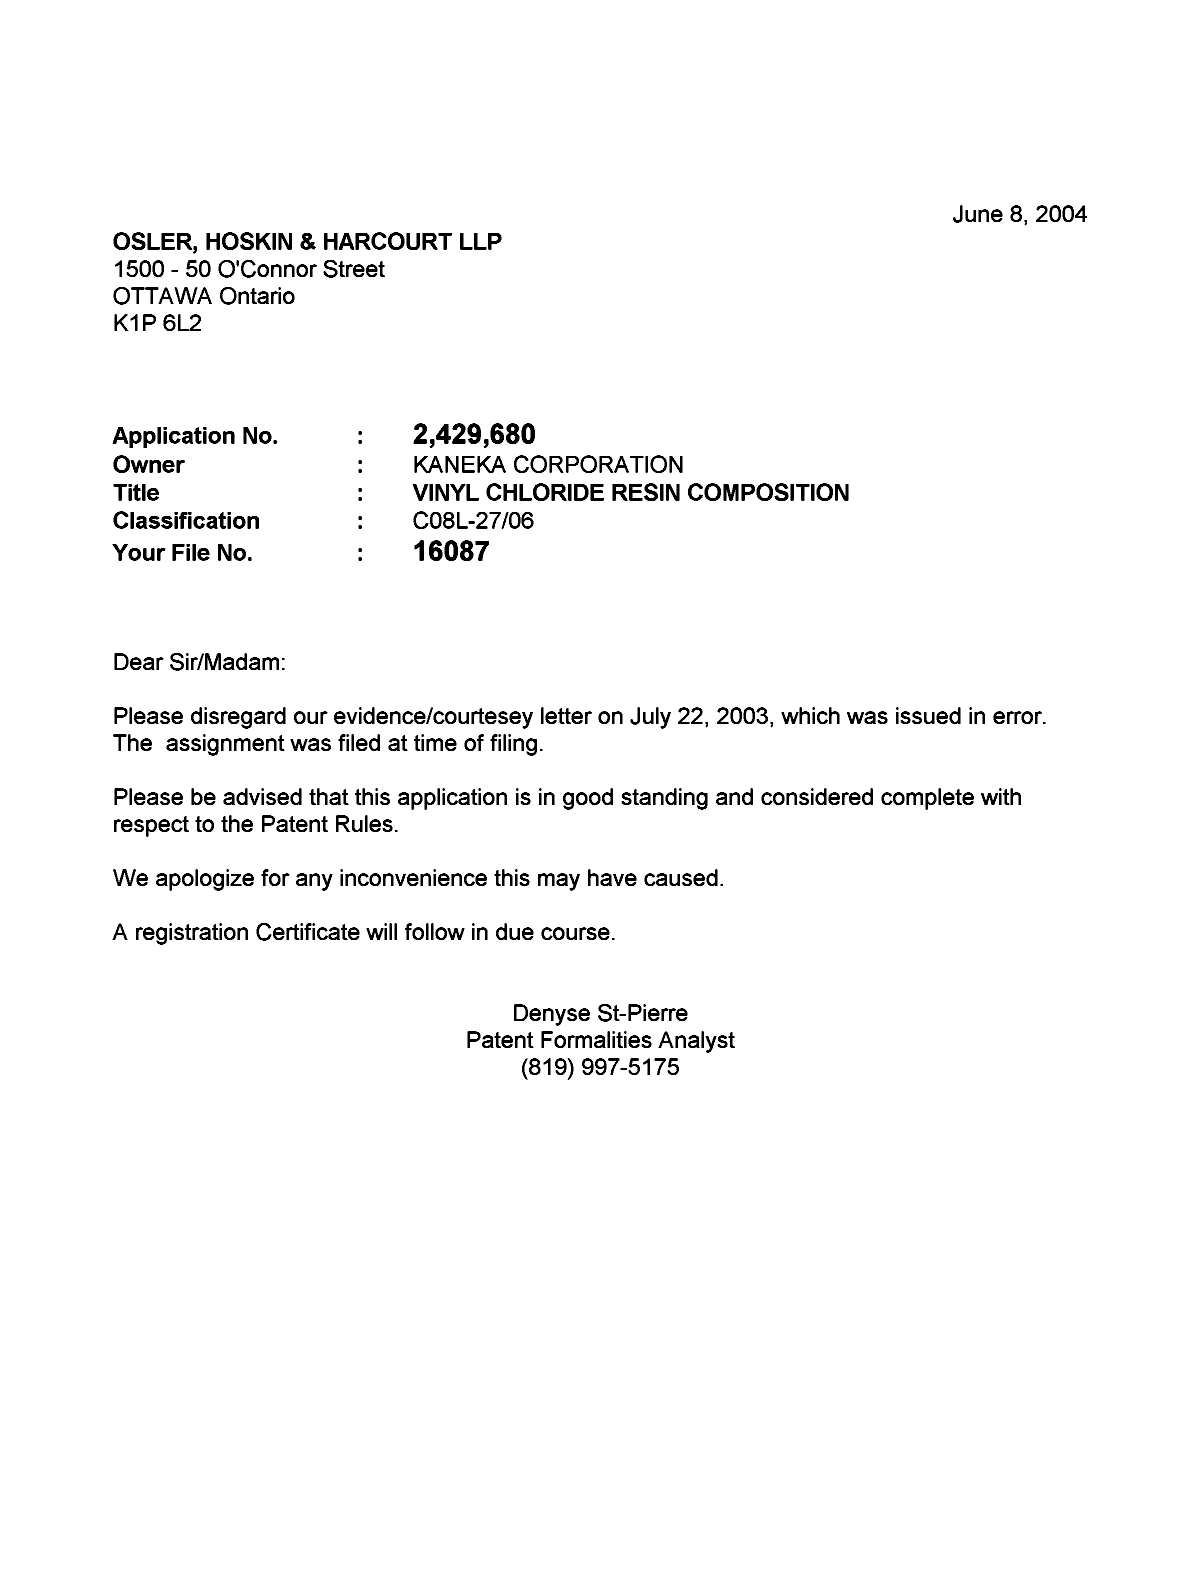 Canadian Patent Document 2429680. Correspondence 20040608. Image 1 of 1